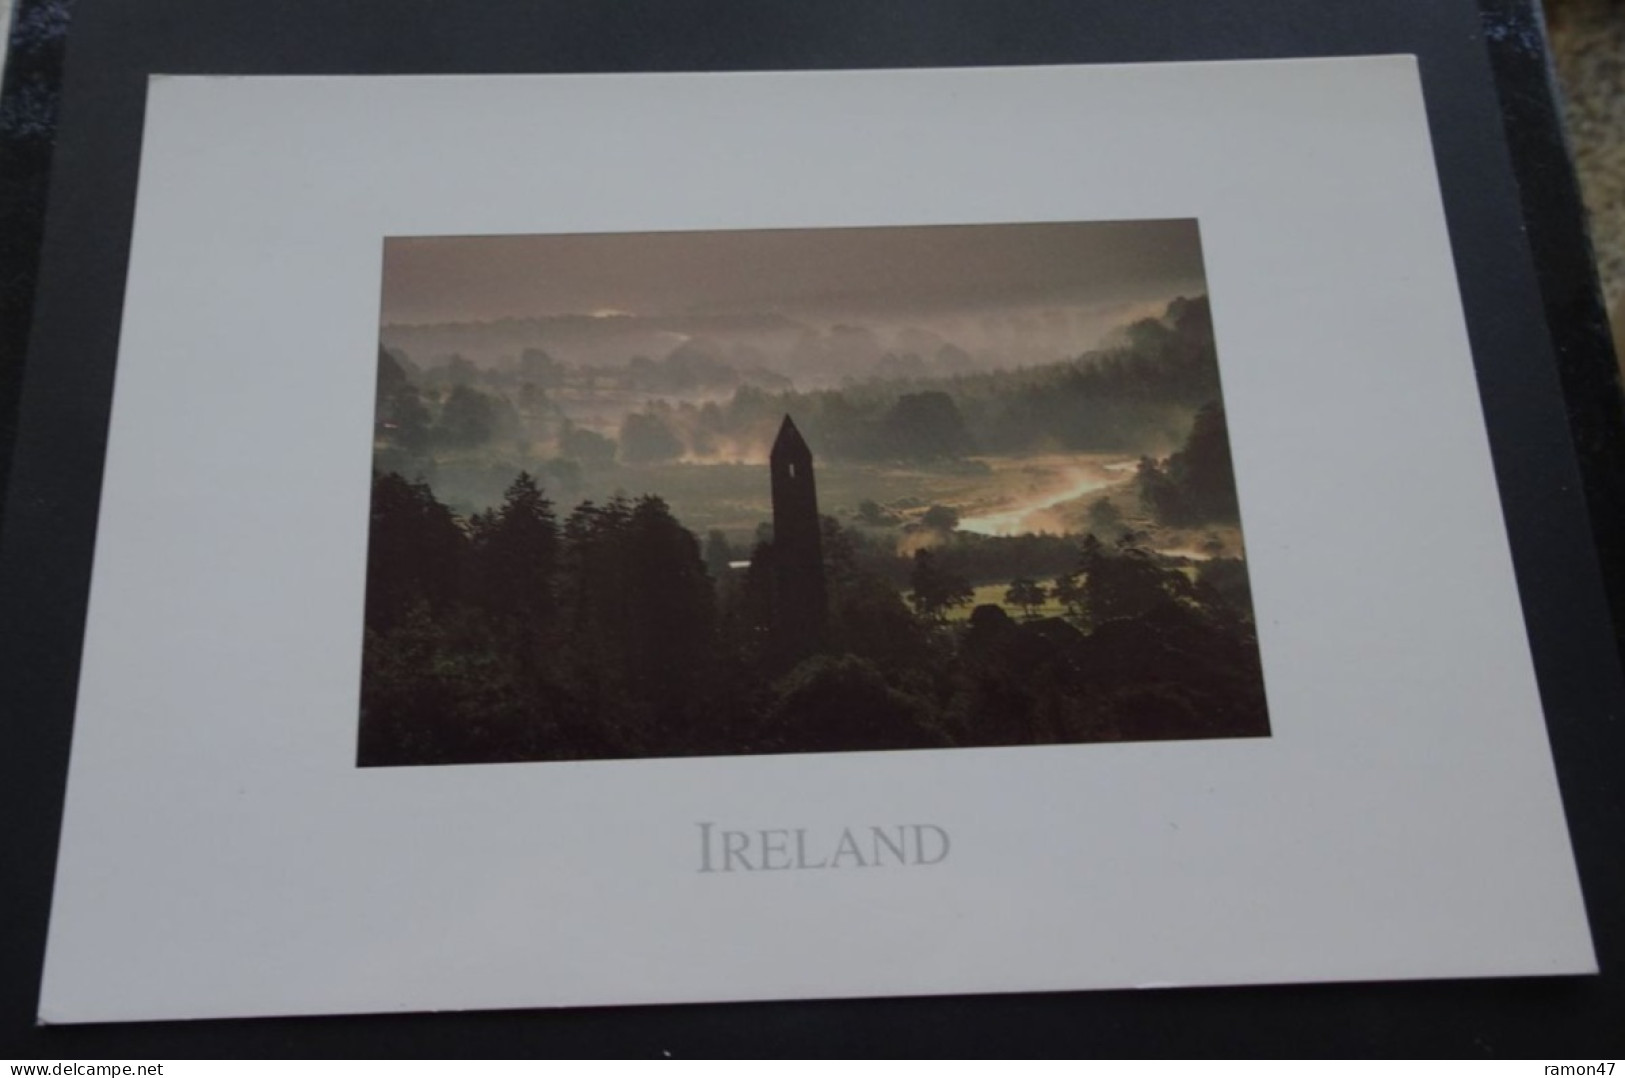 Glendalough - Greetings From Ireland - Insight Cards Ltd. - # IM 9 - Wicklow